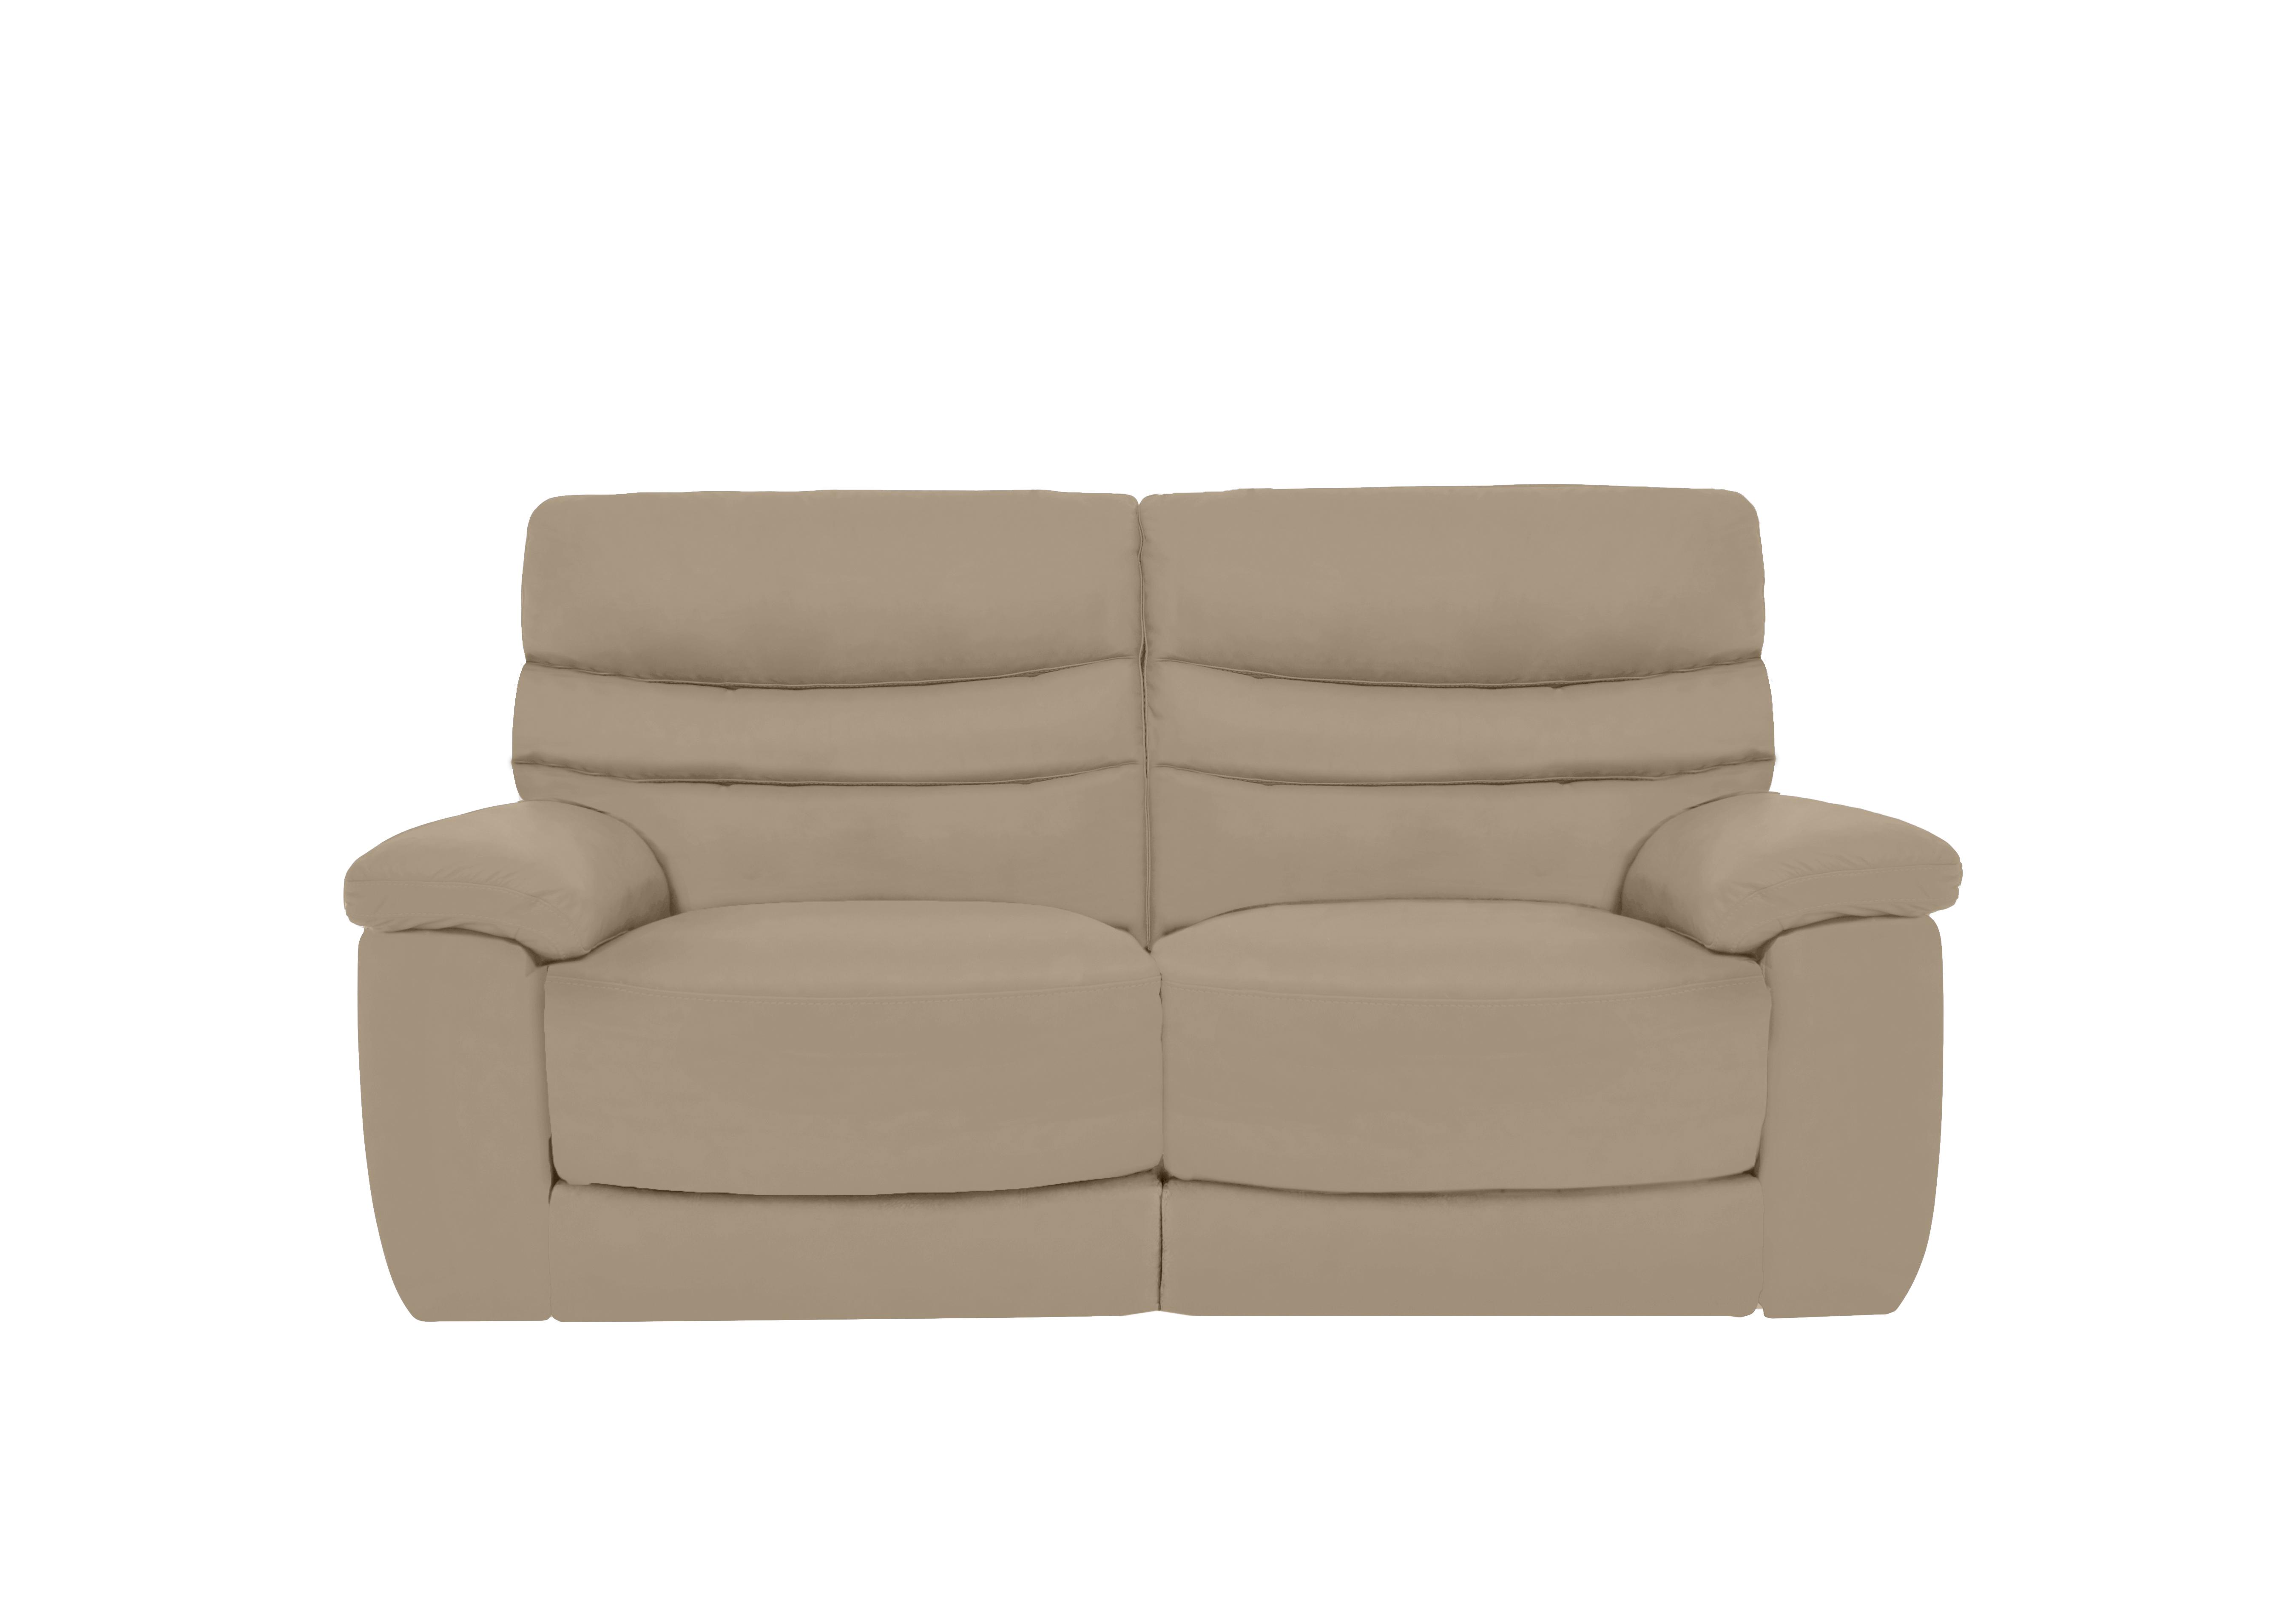 Nimbus 2 Seater Leather Sofa in Bx-039c Pebble on Furniture Village